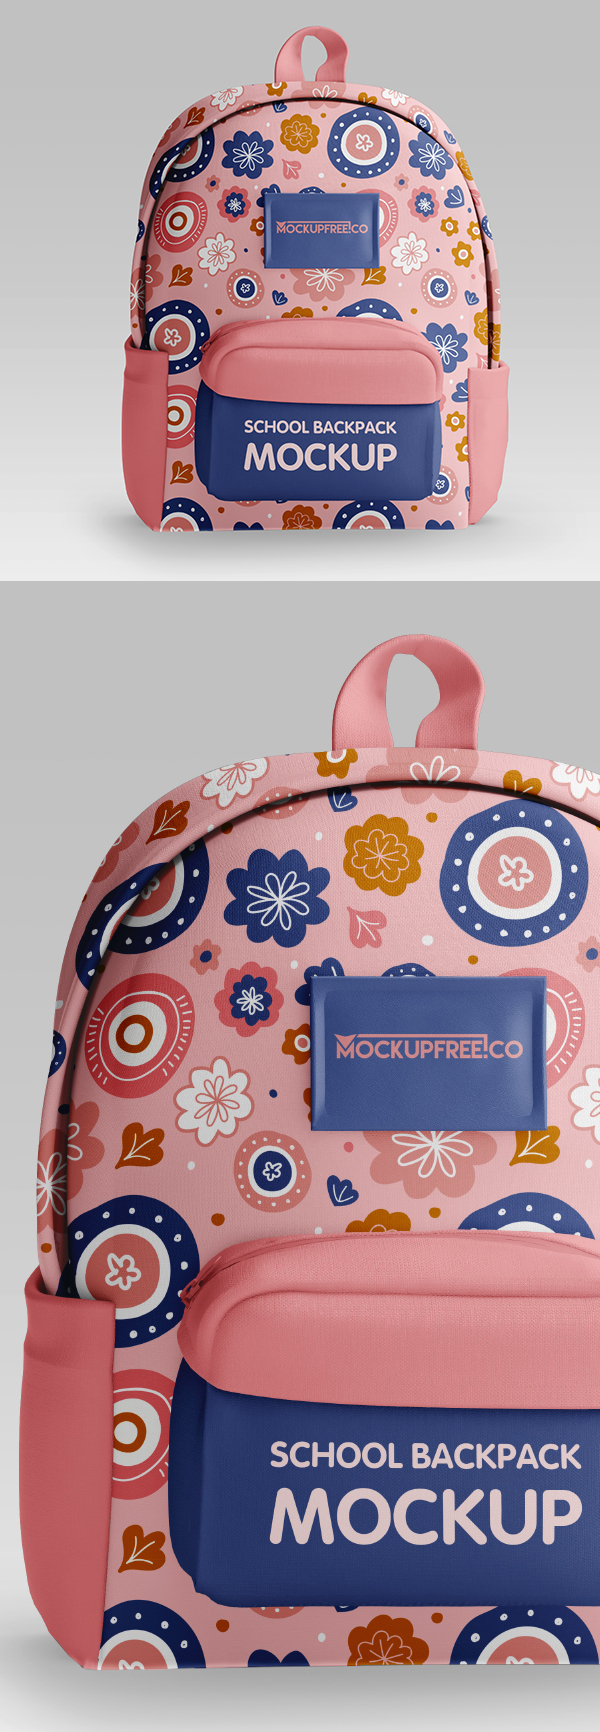 Free School Backpack Mockup PSD Template